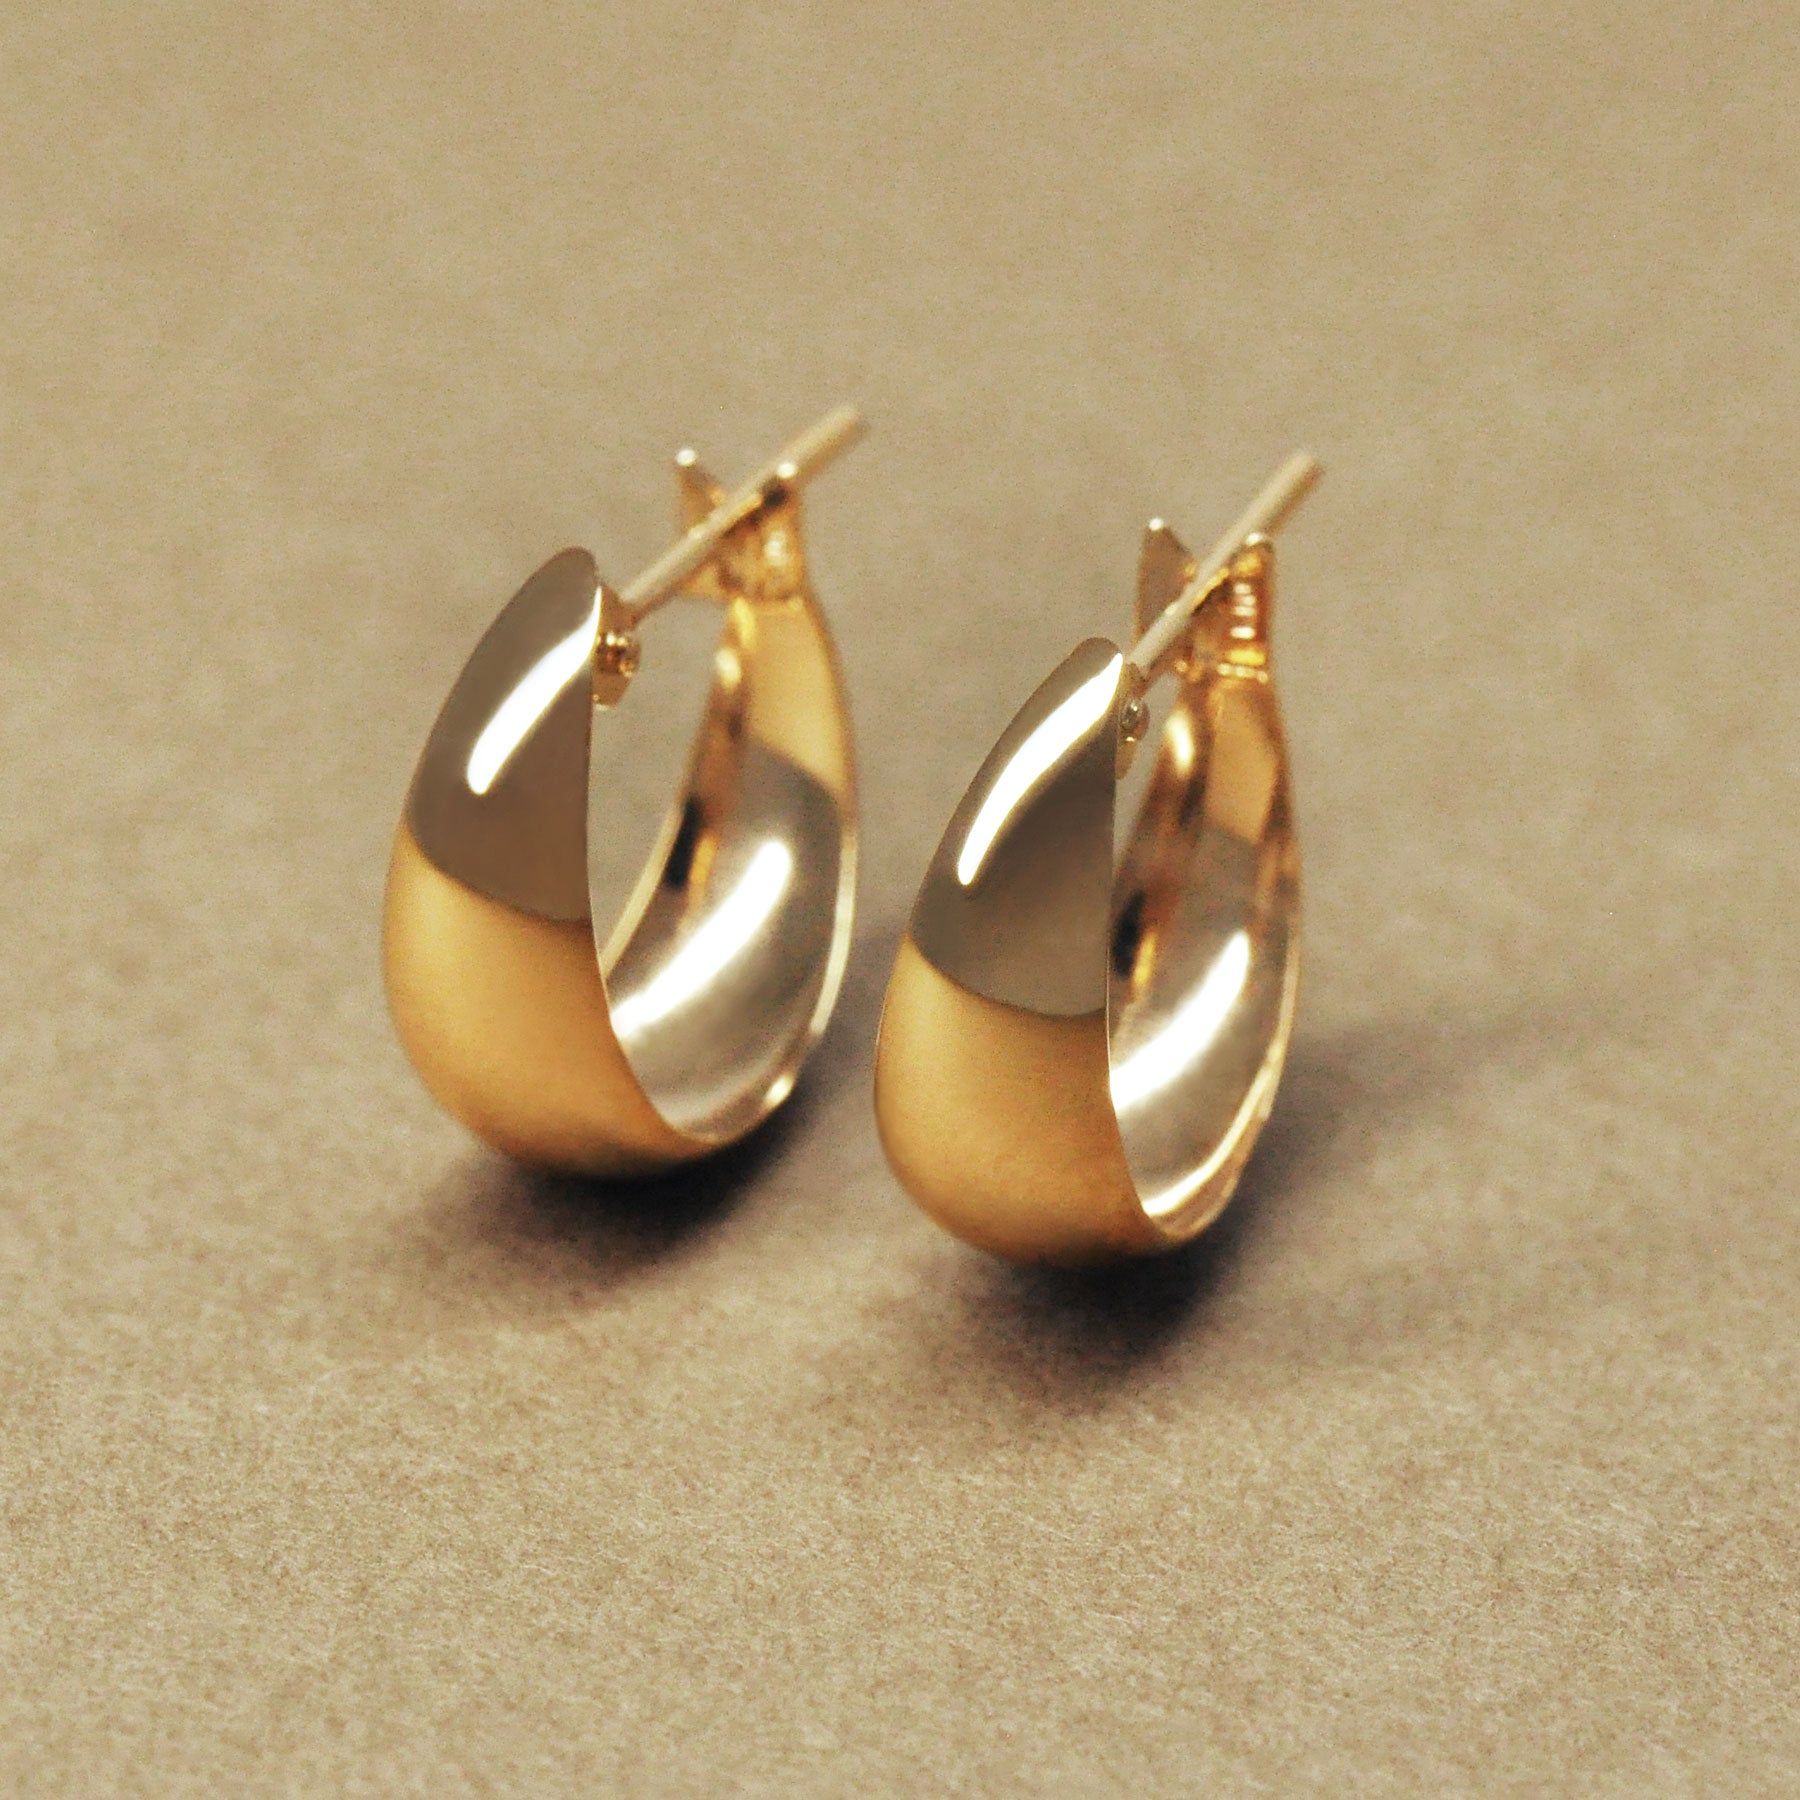 10K Yellow Gold Moon Design Hoop Earrings - Product Image